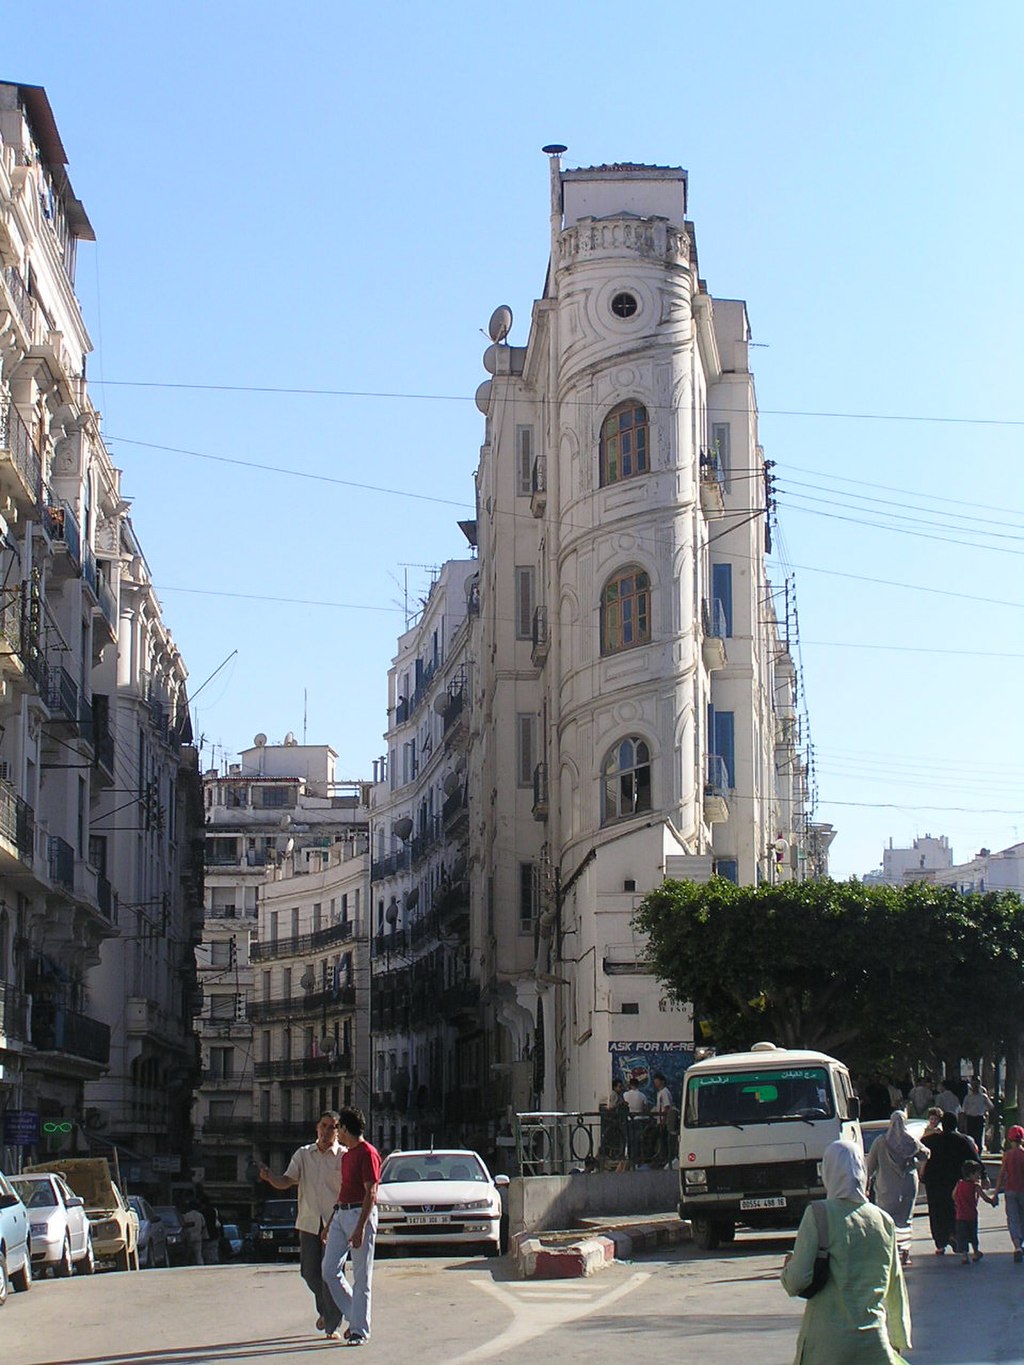 Algiers